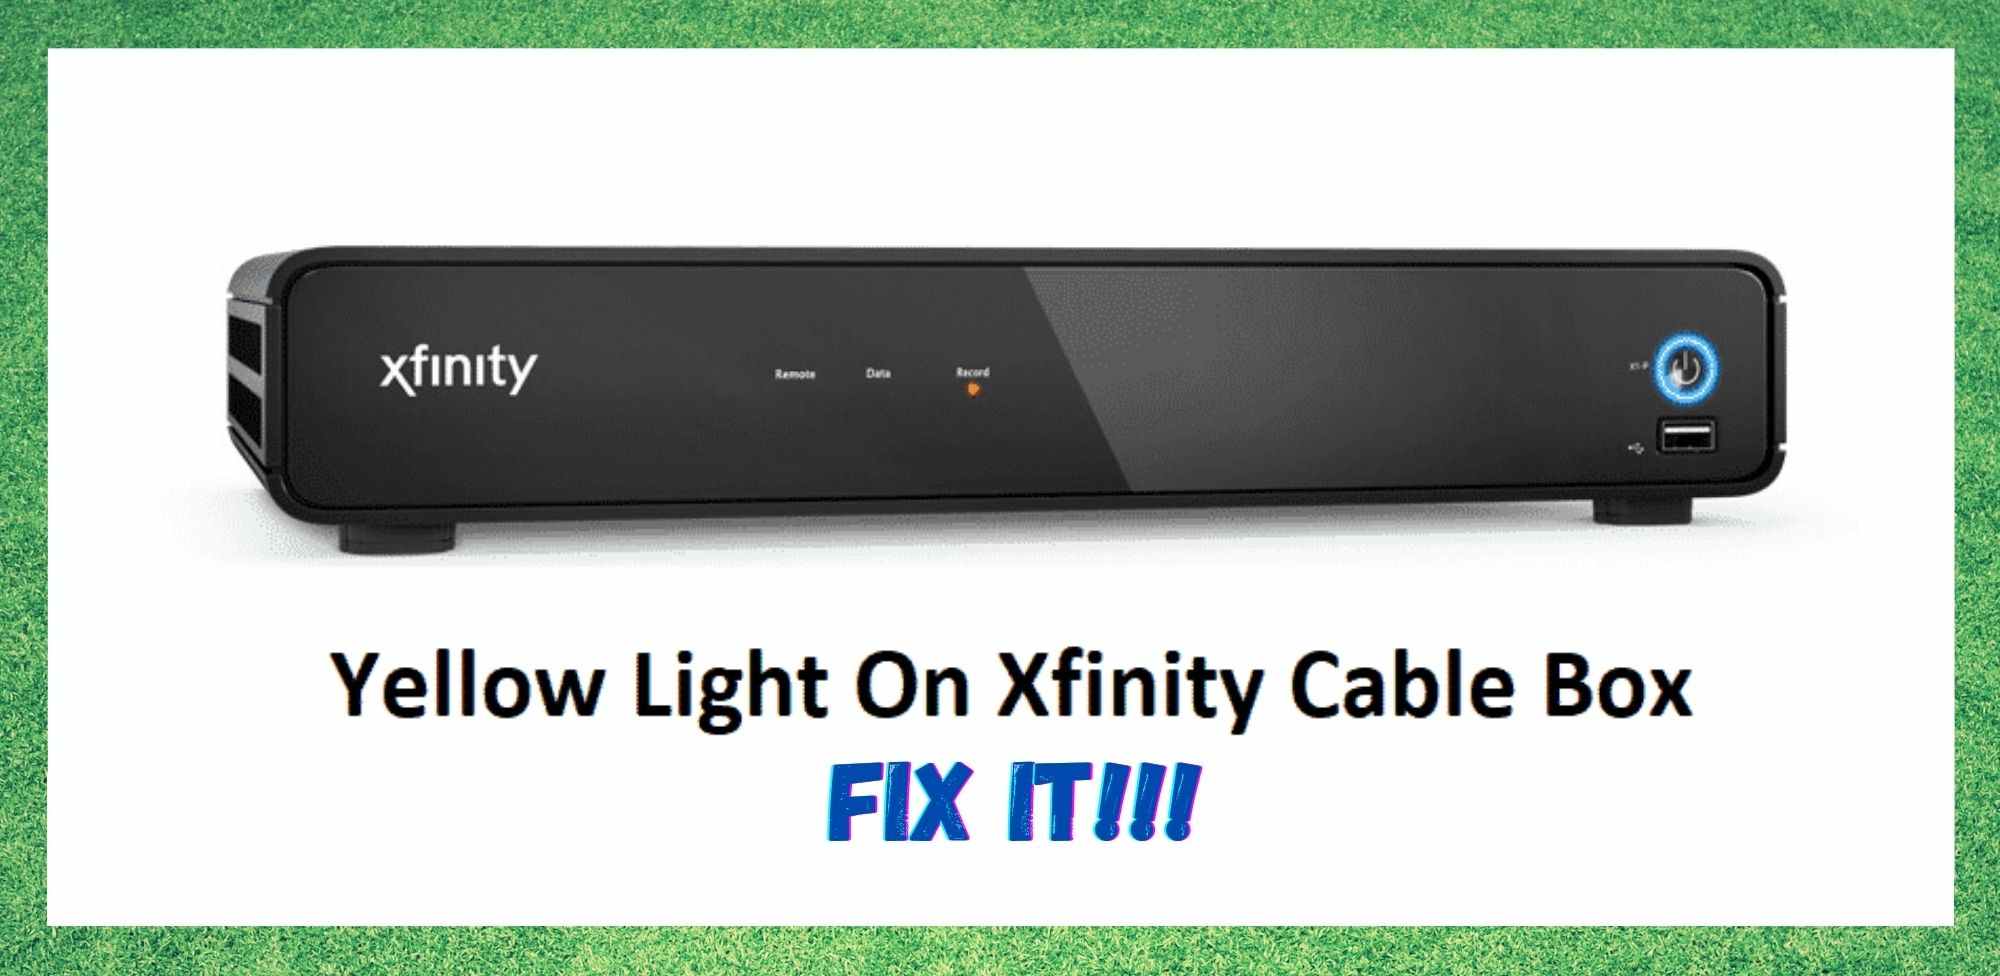 Xfinity કેબલ બોક્સ પર પીળી લાઇટને ઠીક કરવાની 5 રીતો